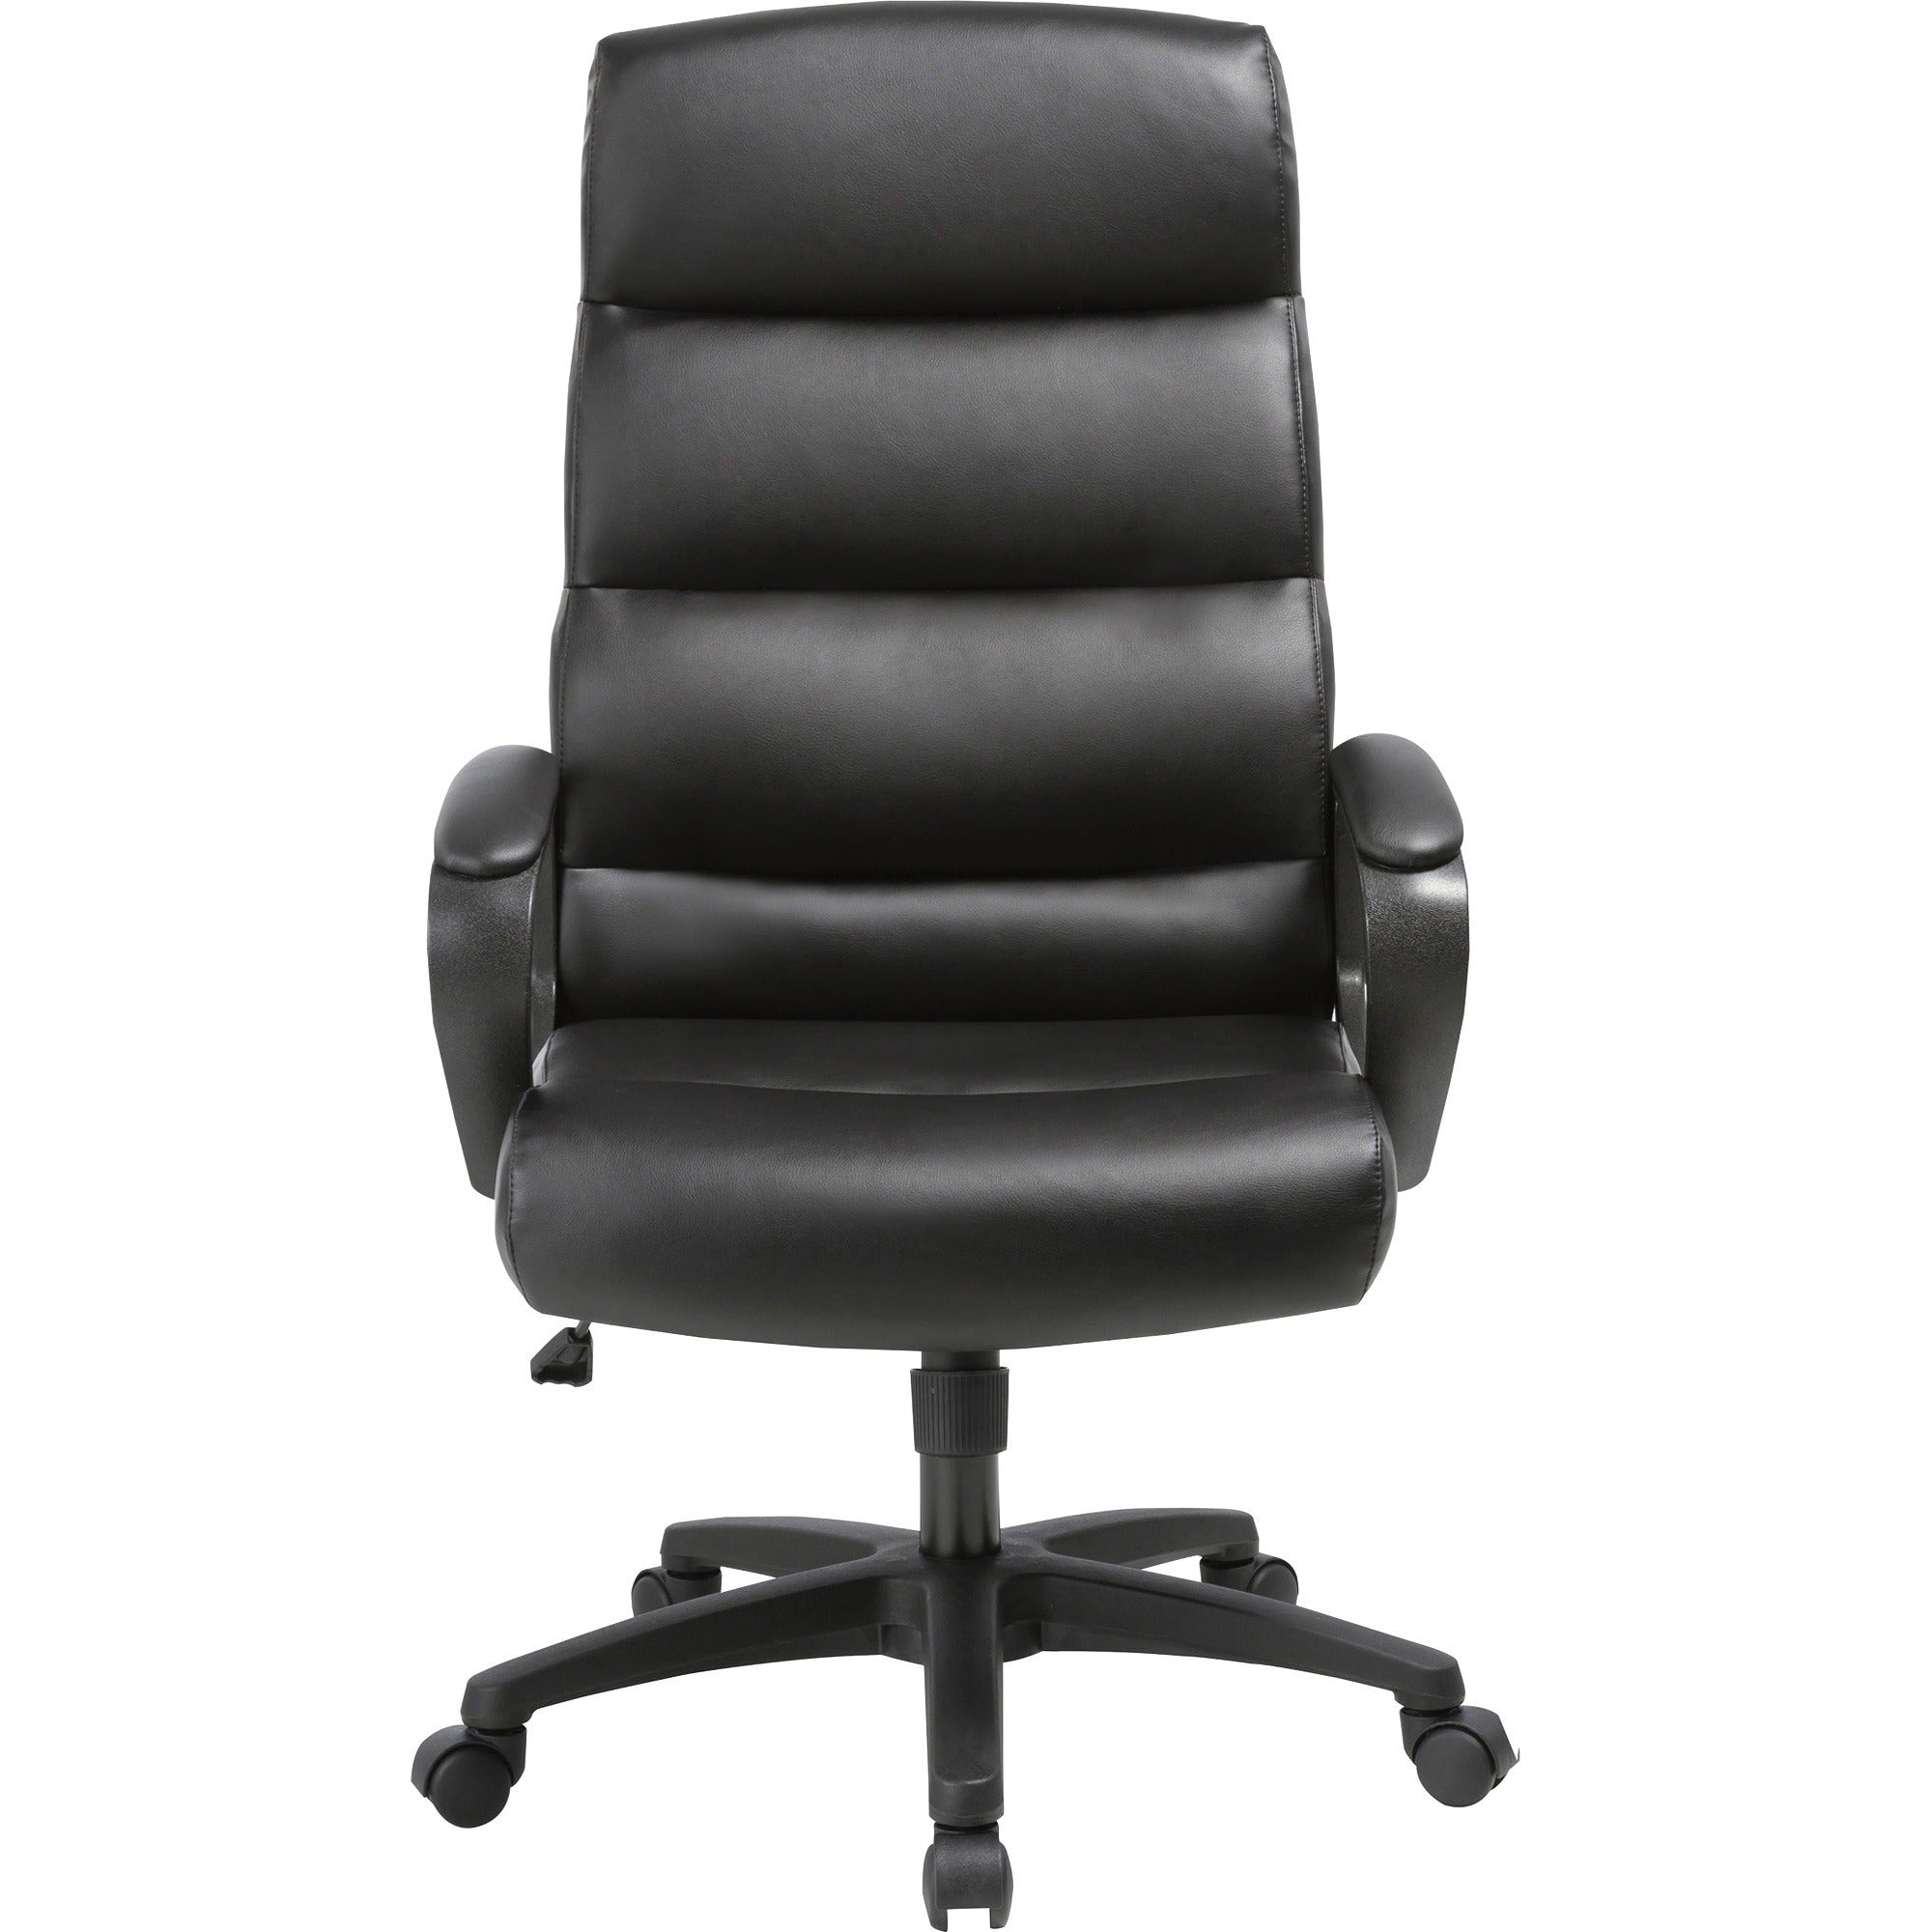 soho-soho-high-back-executive-chair-black-bonded-leather-seat-black-bonded-leather-back-high-back-5-star-base-1-each_llr41843 - 2